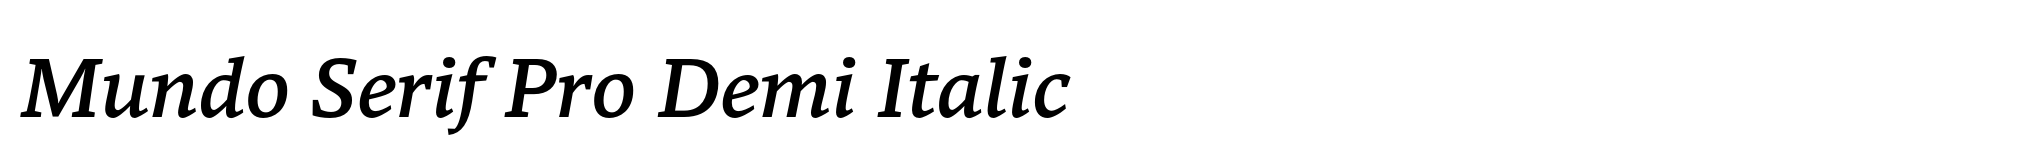 Mundo Serif Pro Demi Italic image